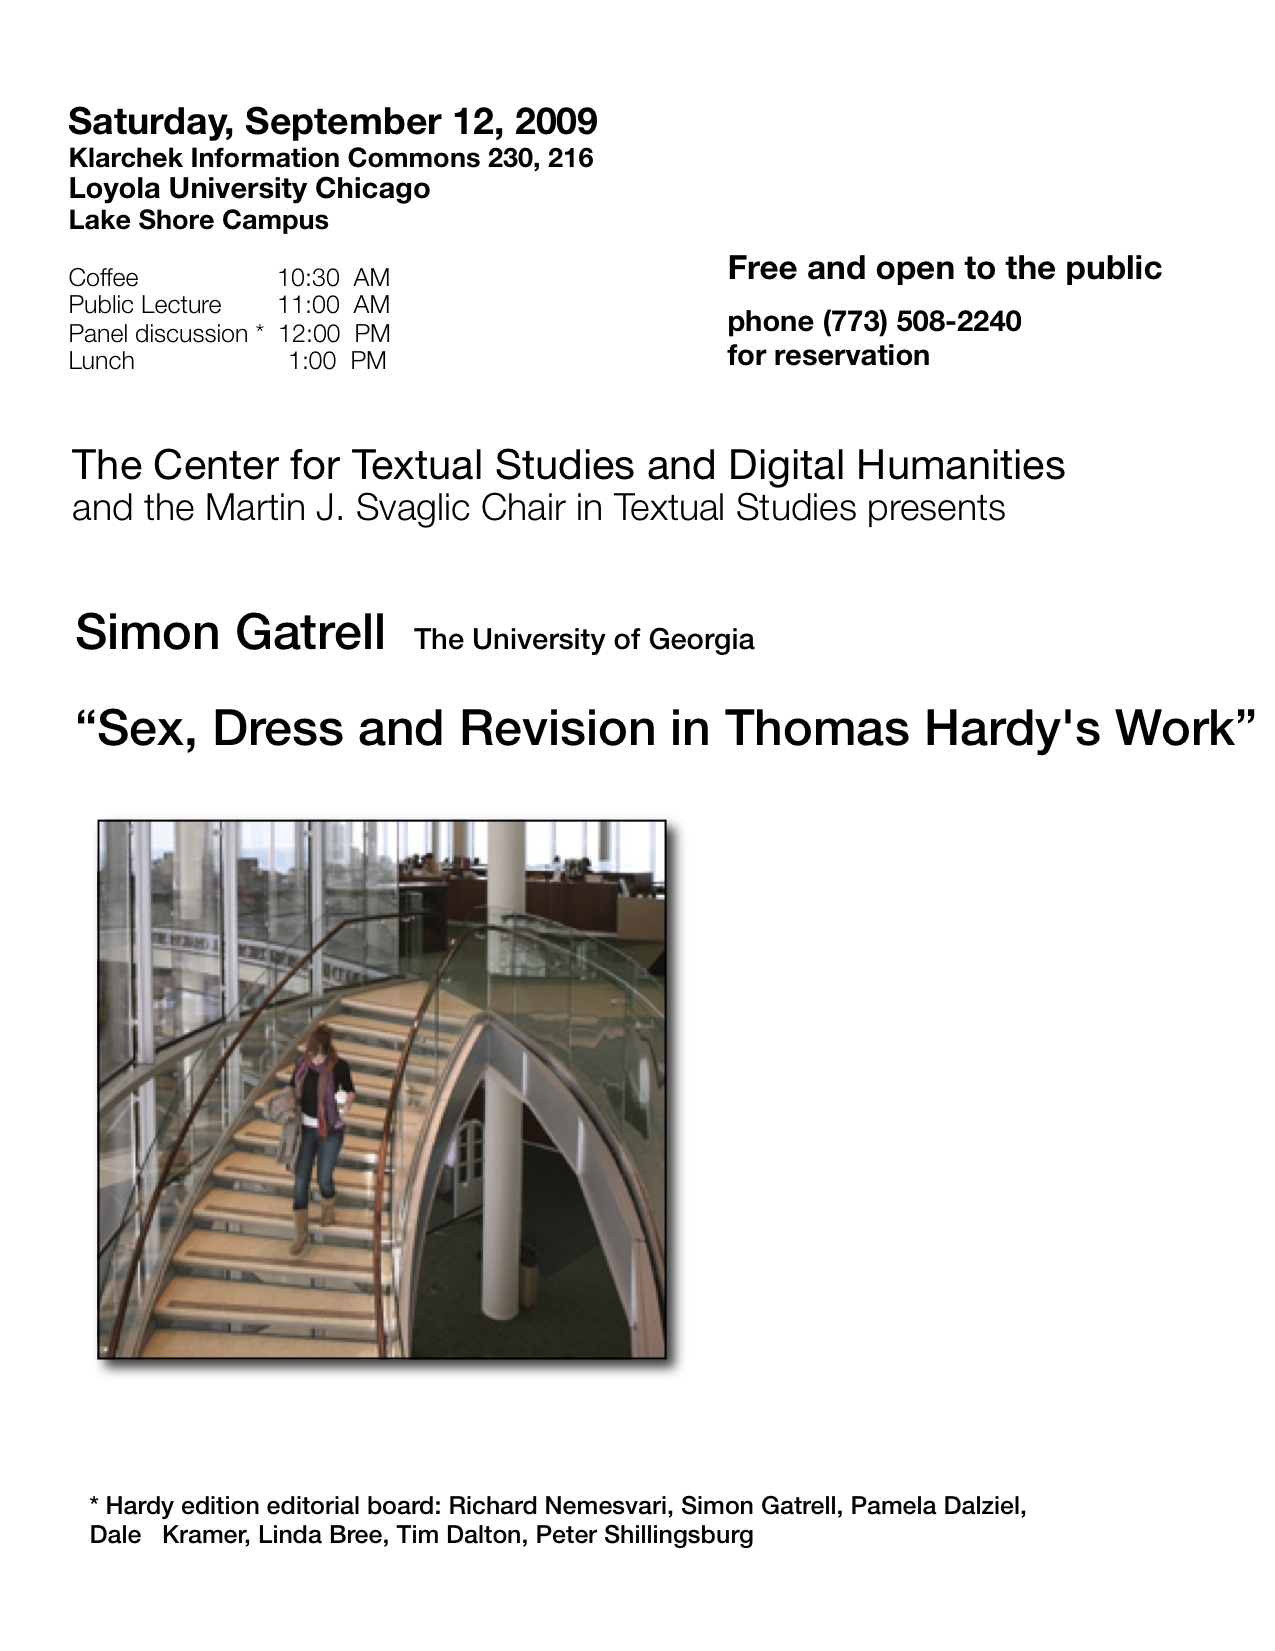 Sex, Dress and Revision in Thomas Hardy’s Work - Simon Gatrell (U Georgia) September 12, 2009
